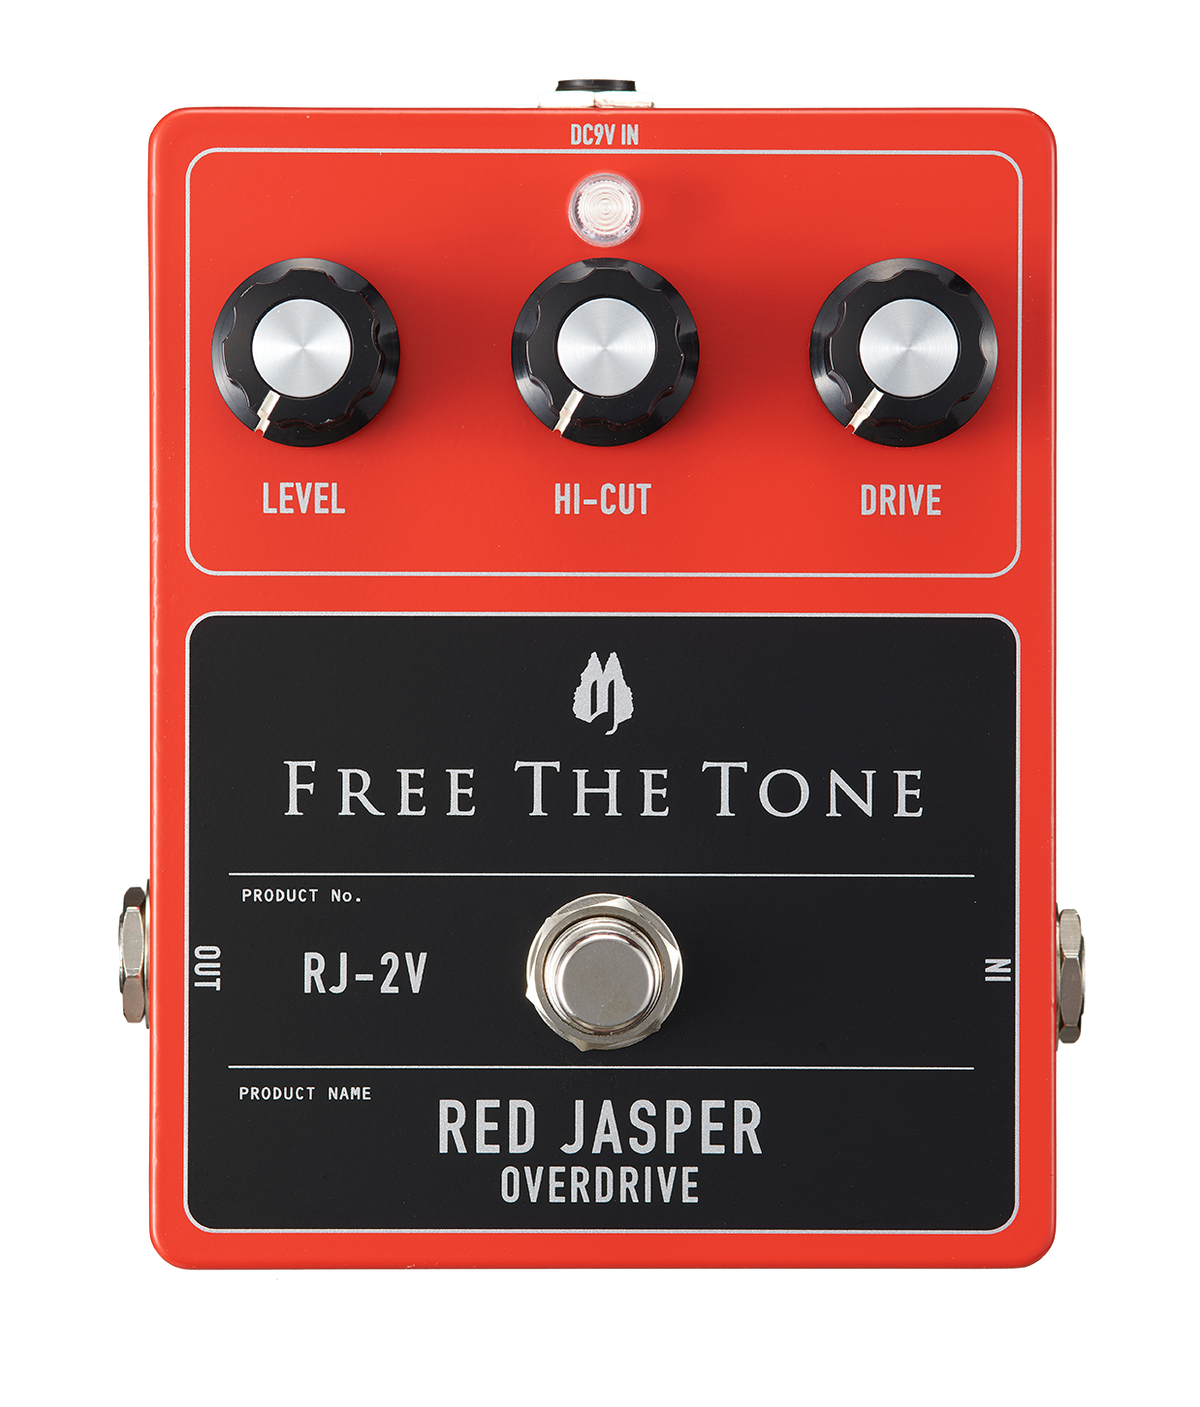 Free The Tone Unveils the RJ-2V Red Jasper Overdrive​